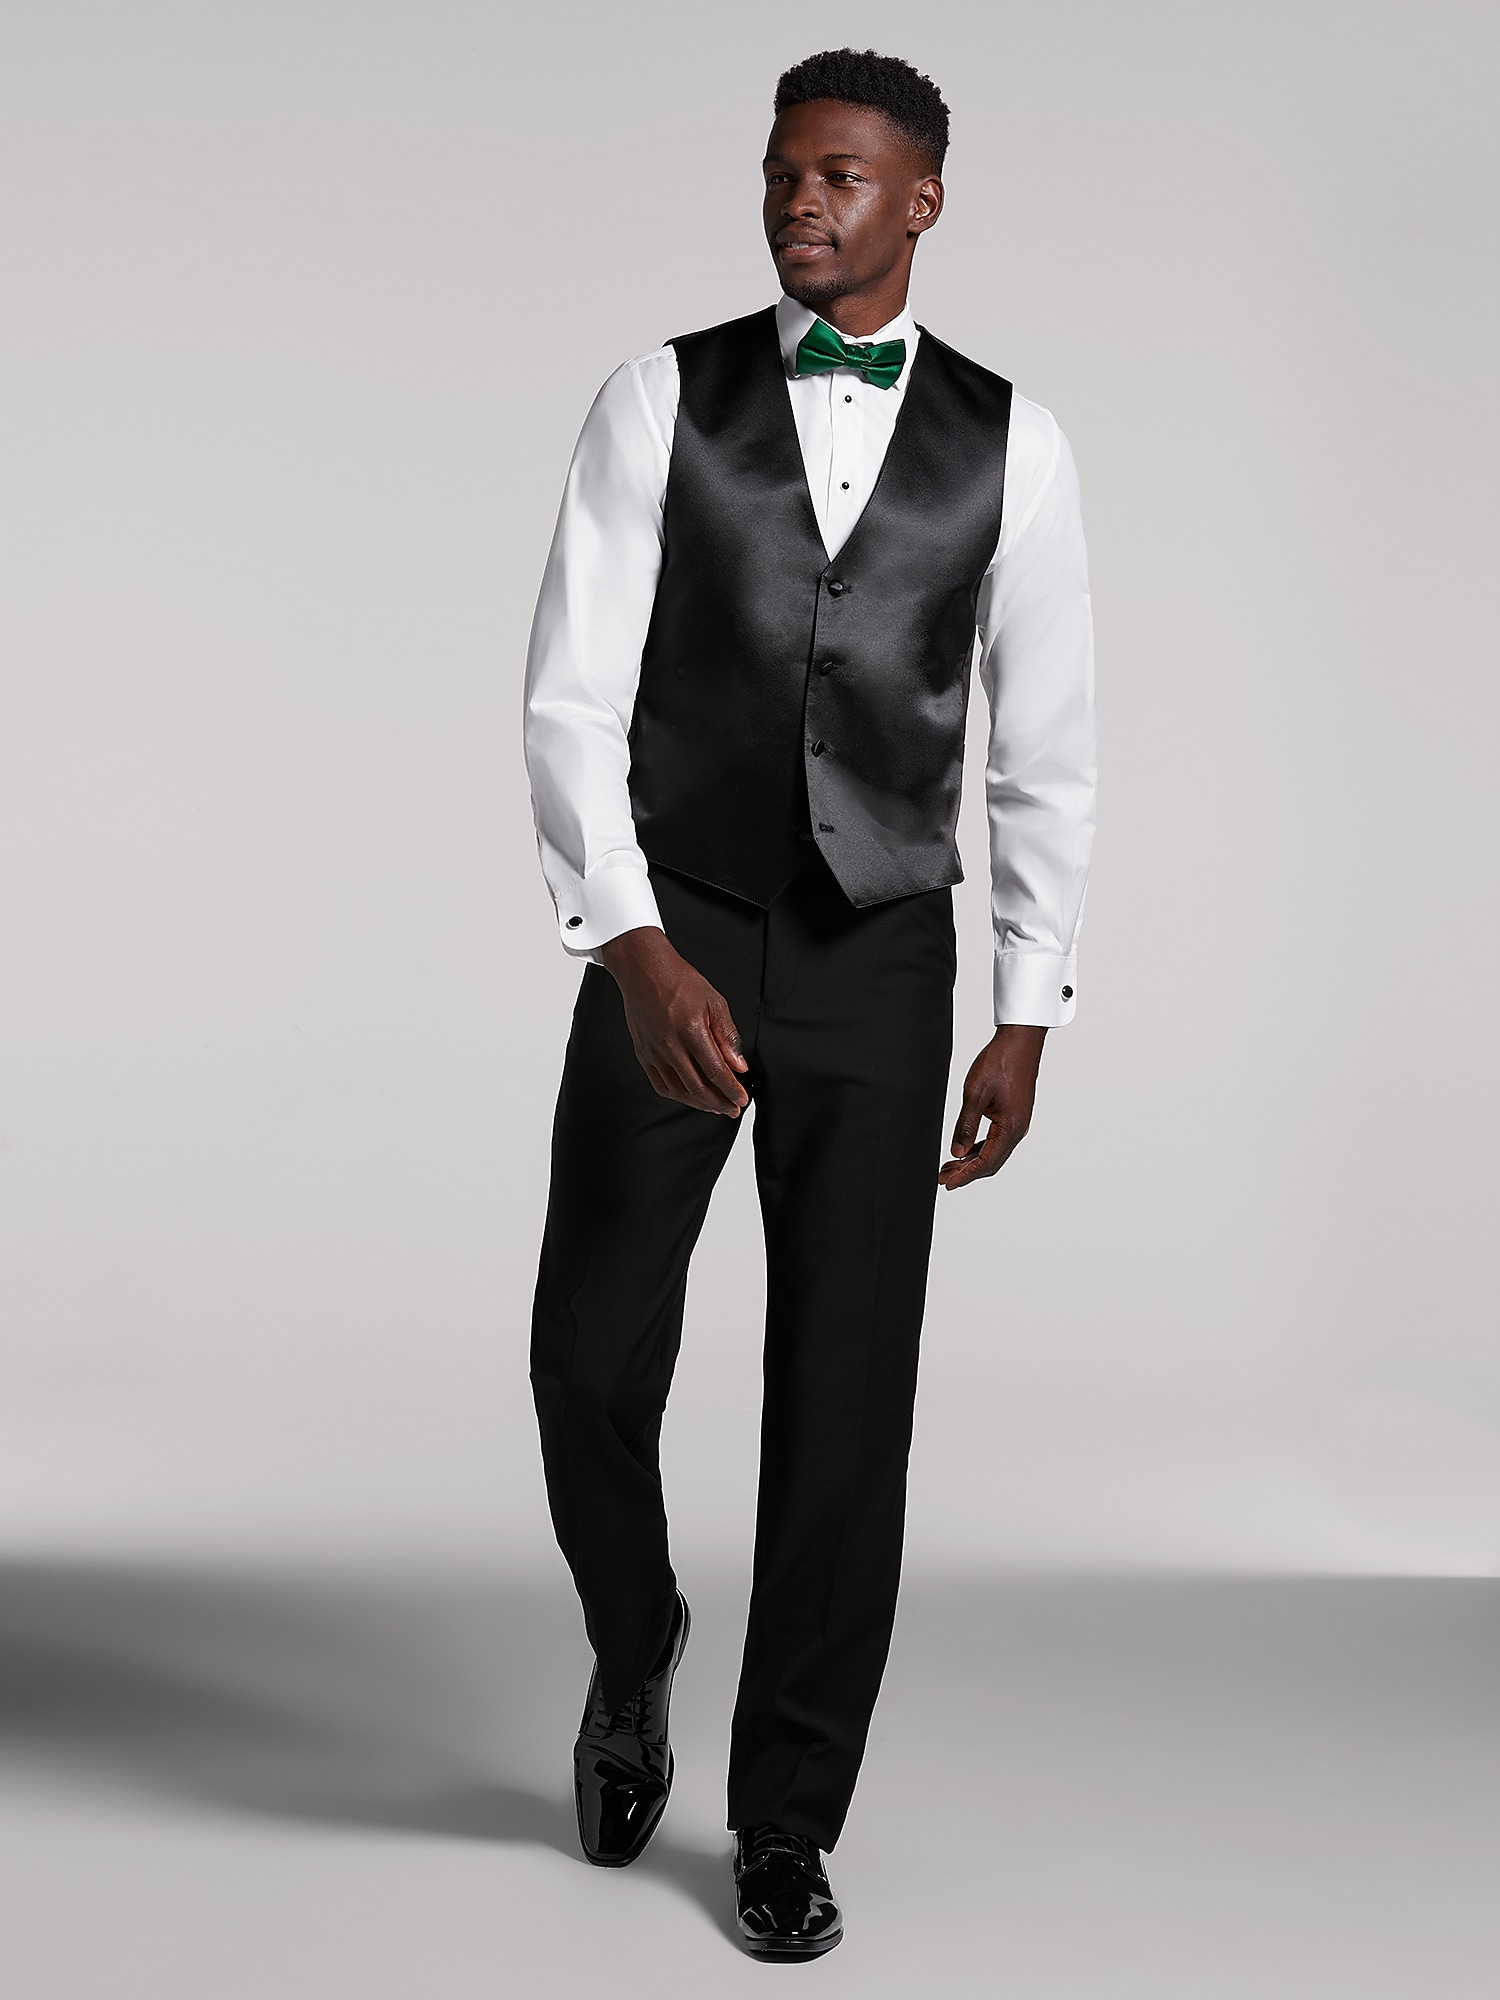 Classic Black Tux by Calvin Klein | Tuxedo Rental